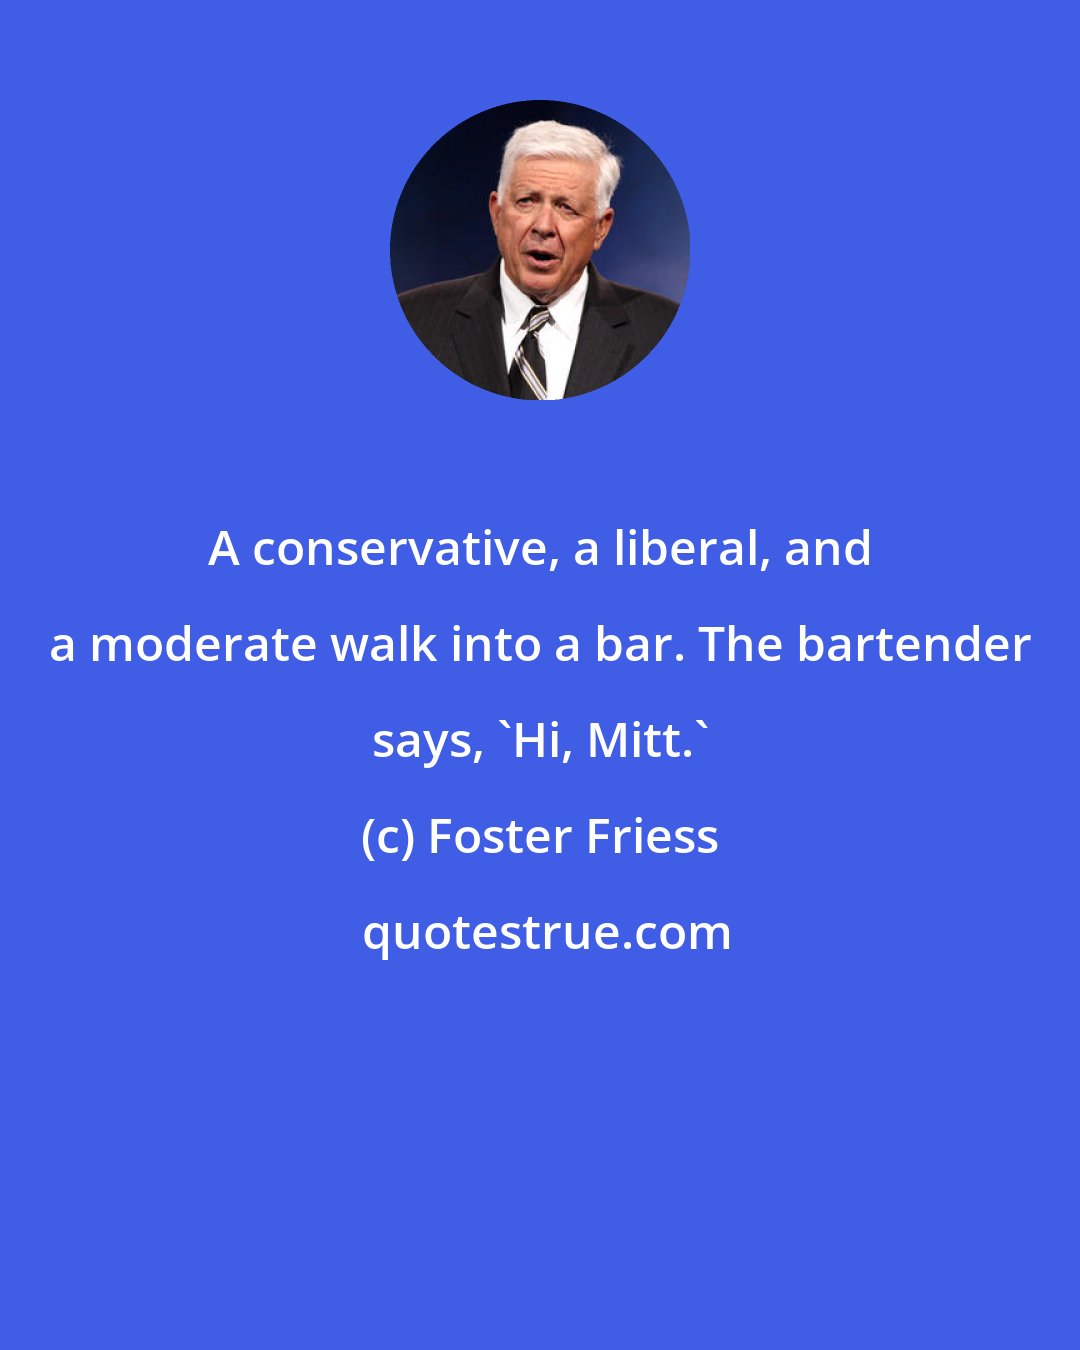 Foster Friess: A conservative, a liberal, and a moderate walk into a bar. The bartender says, 'Hi, Mitt.'